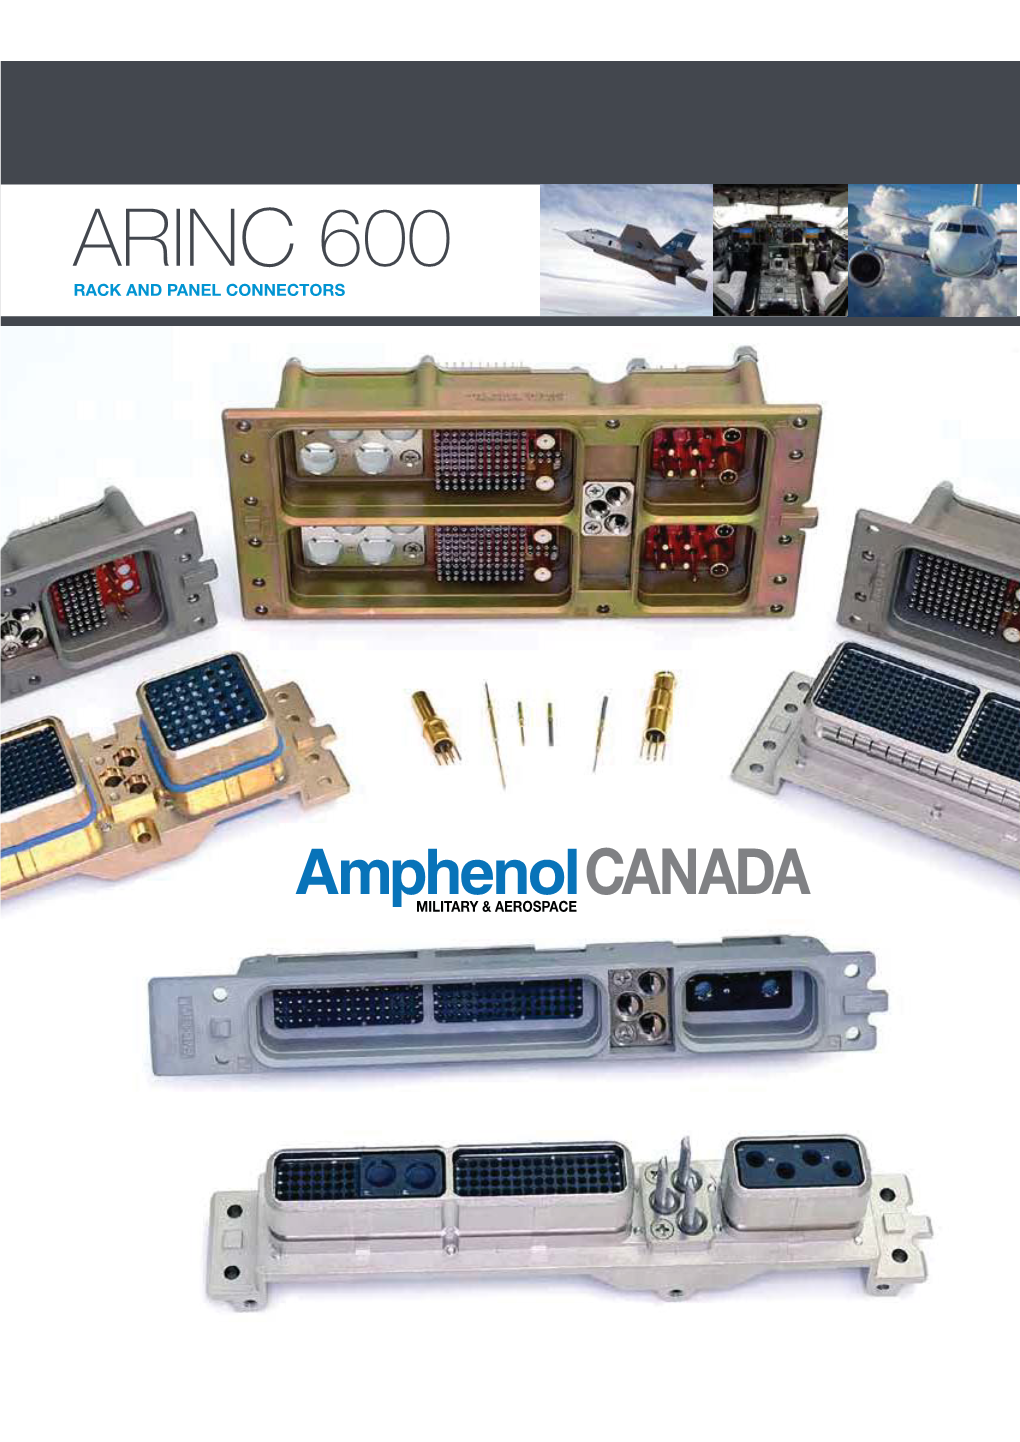 Arinc 600 Rack and Panel Connectors